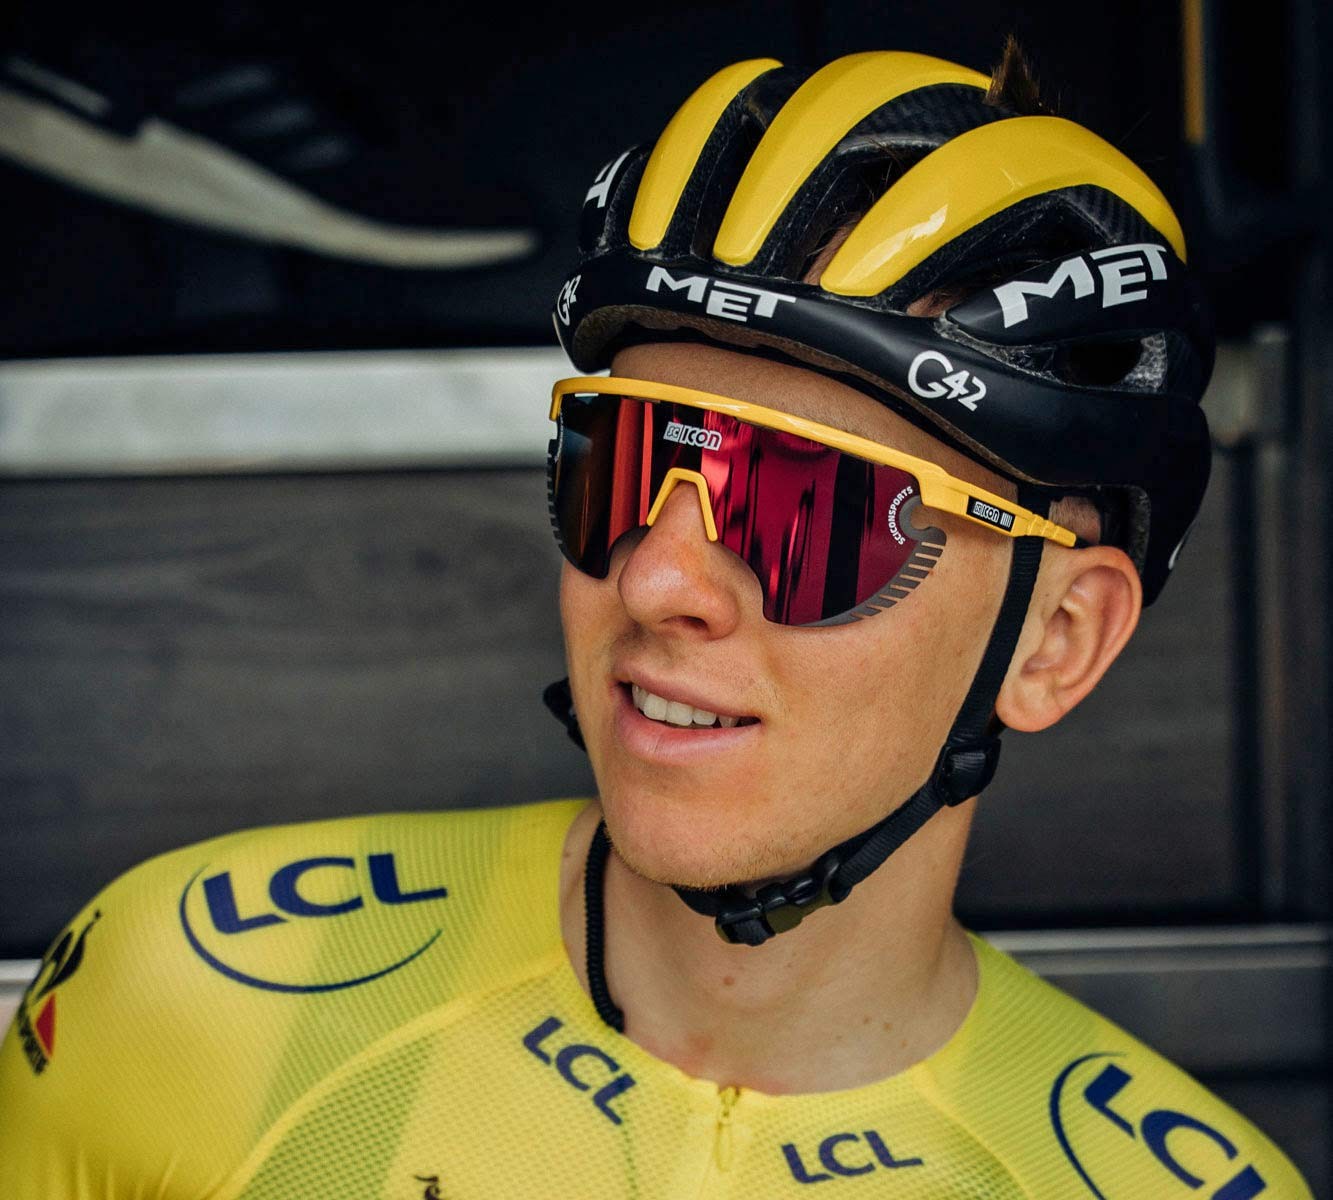 Scicon-AeroWing-Lamon-sunglasses digunakan oleh Tadeg Pogacar, pemegang yellow jersey Tour de France 2021. (Foto: Ist)